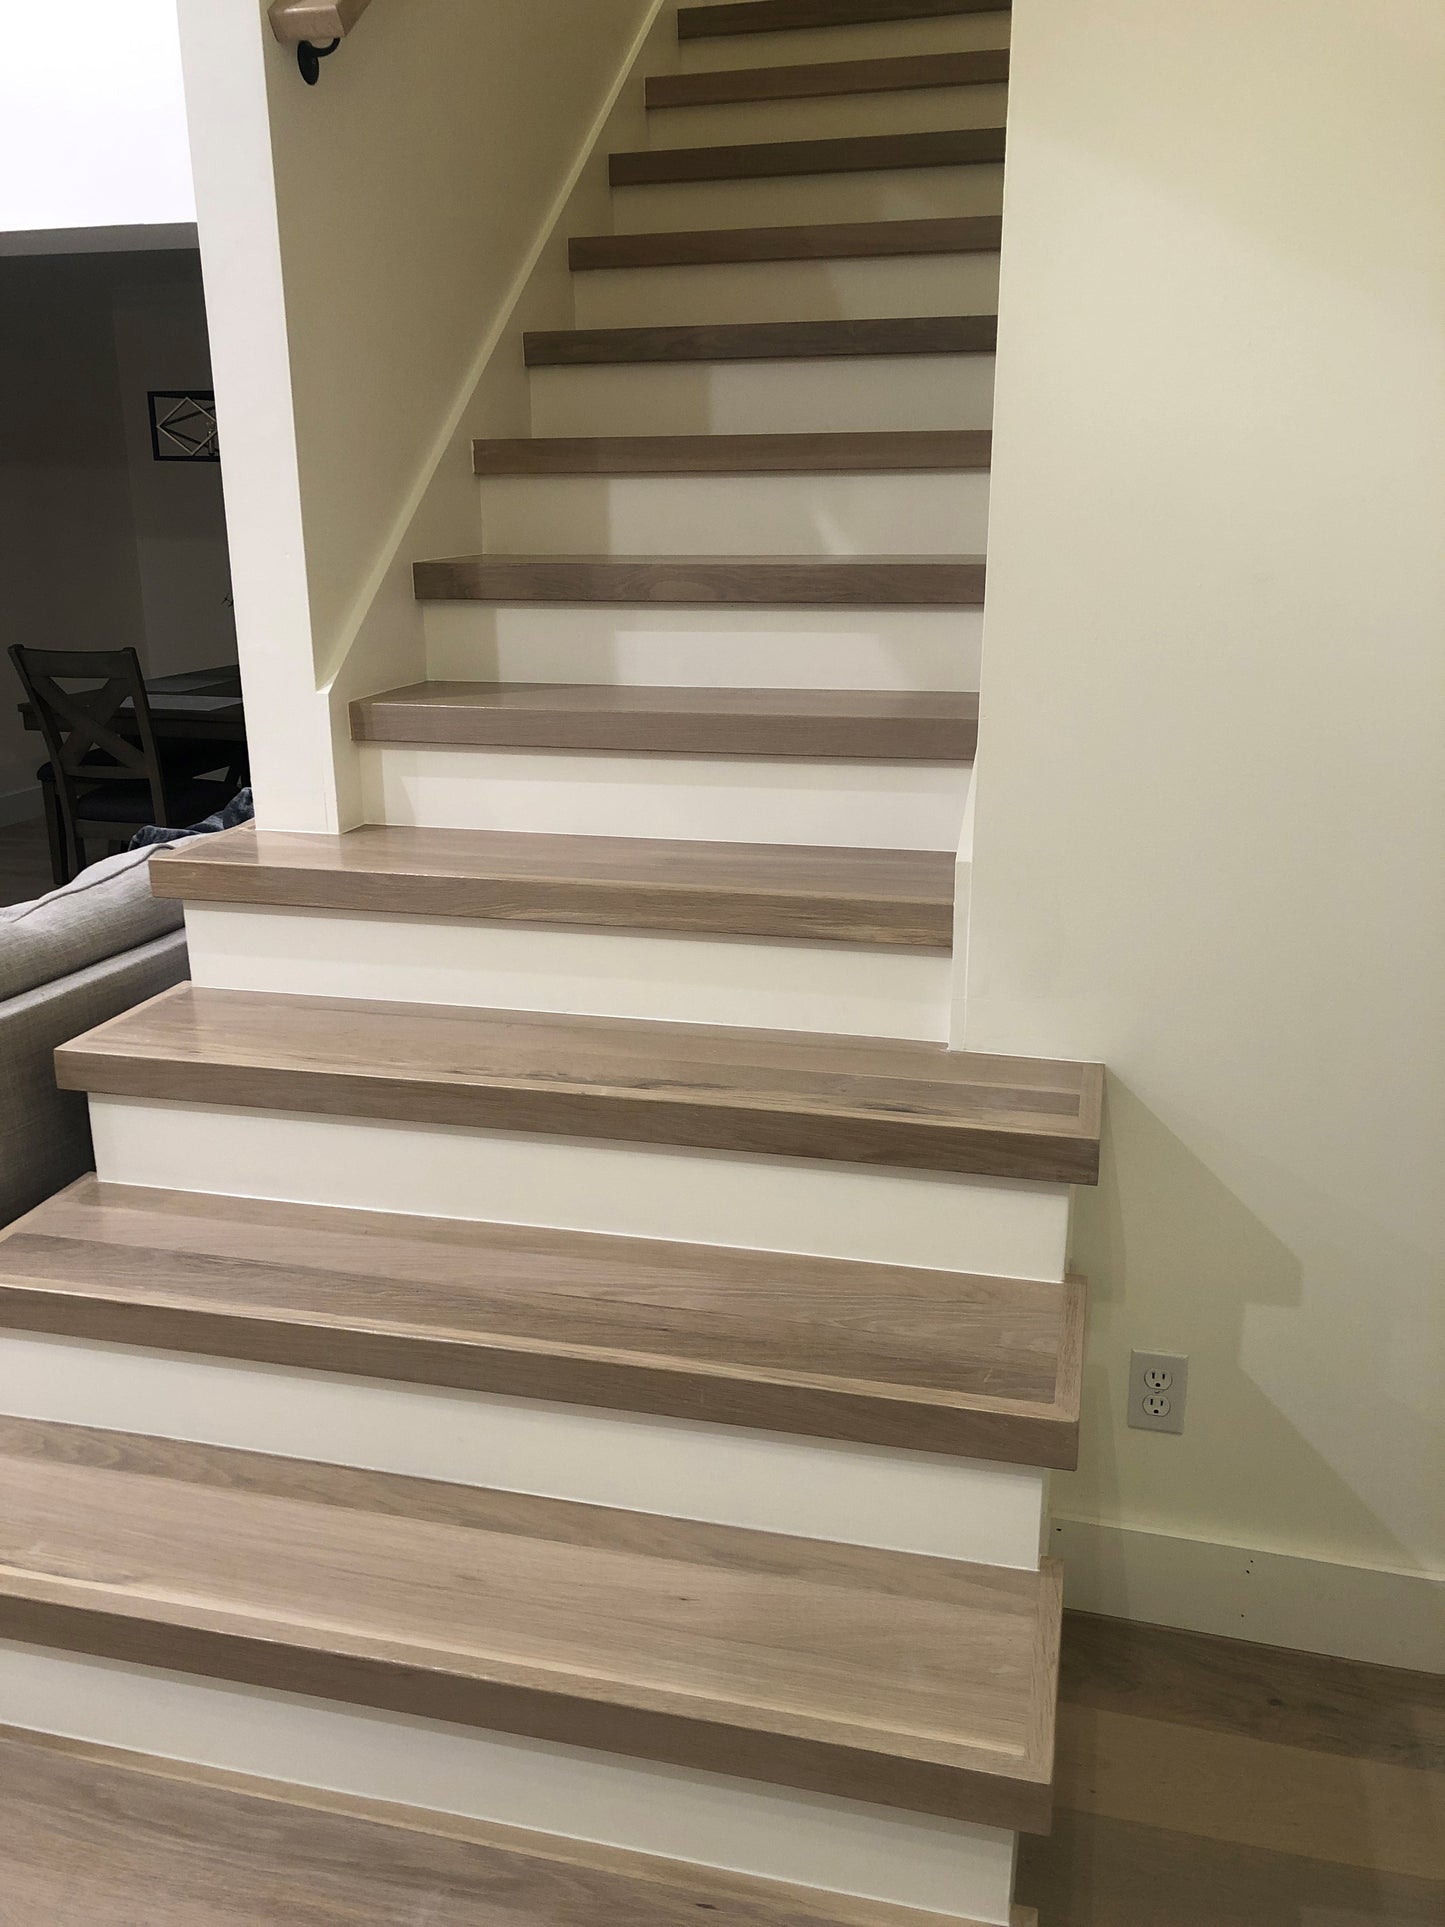 Retrofit Stair Tread - Modern Design - 0.625 in. x 11.5 in.